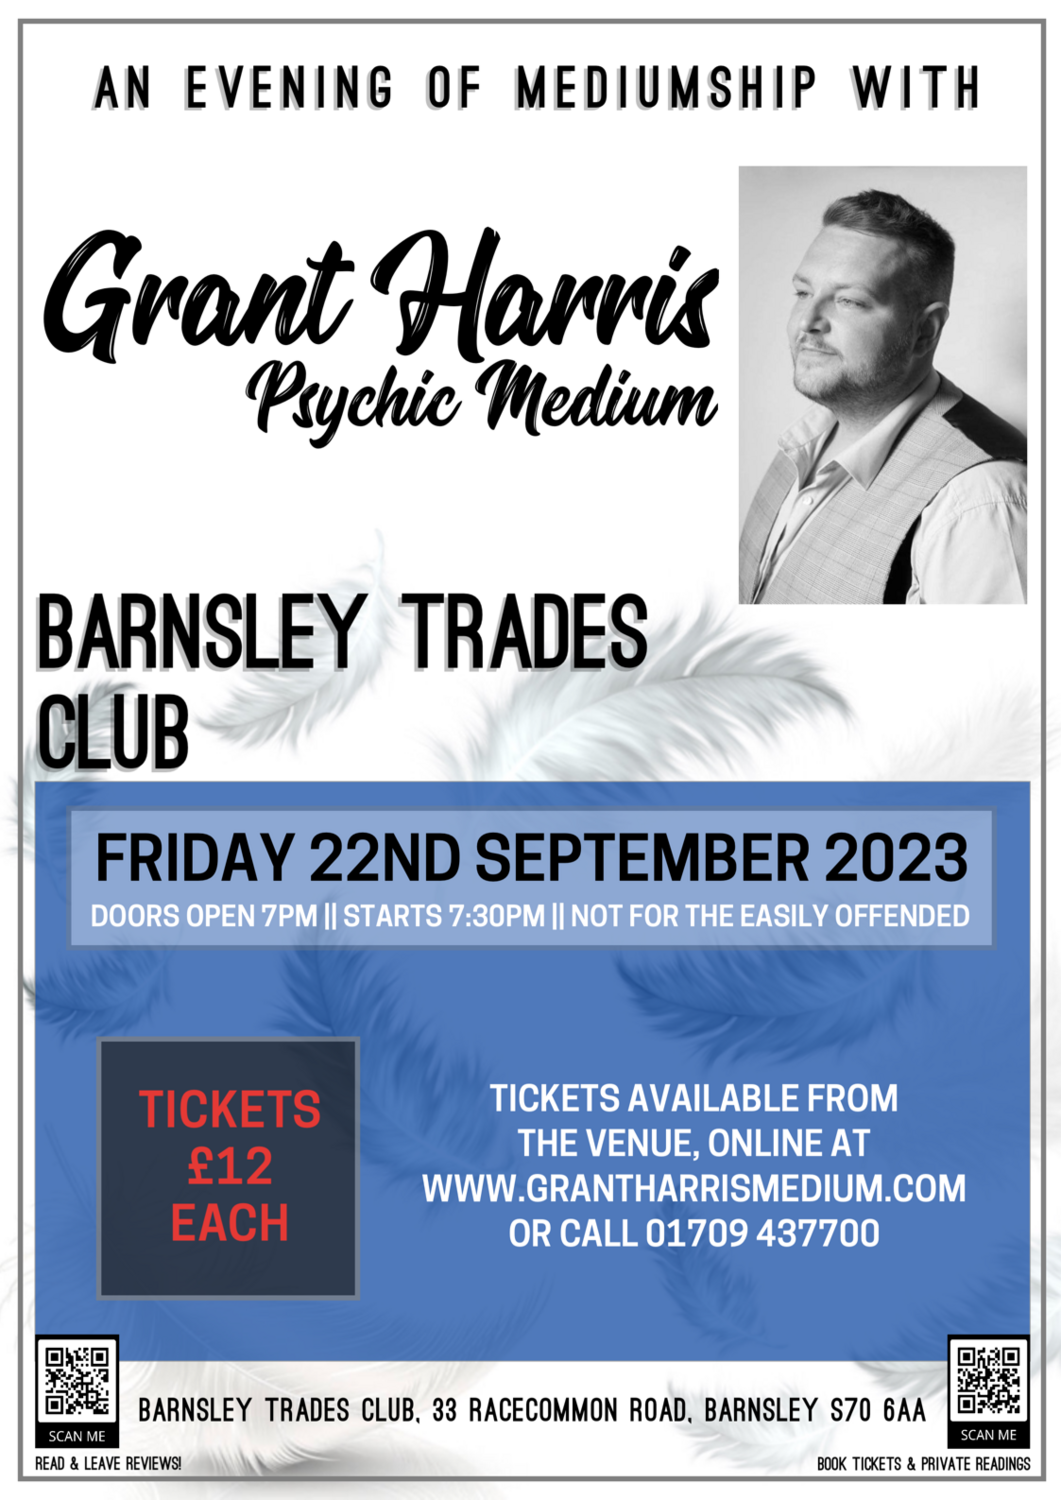 Barnsley Trades Club, Friday 22nd September 2023